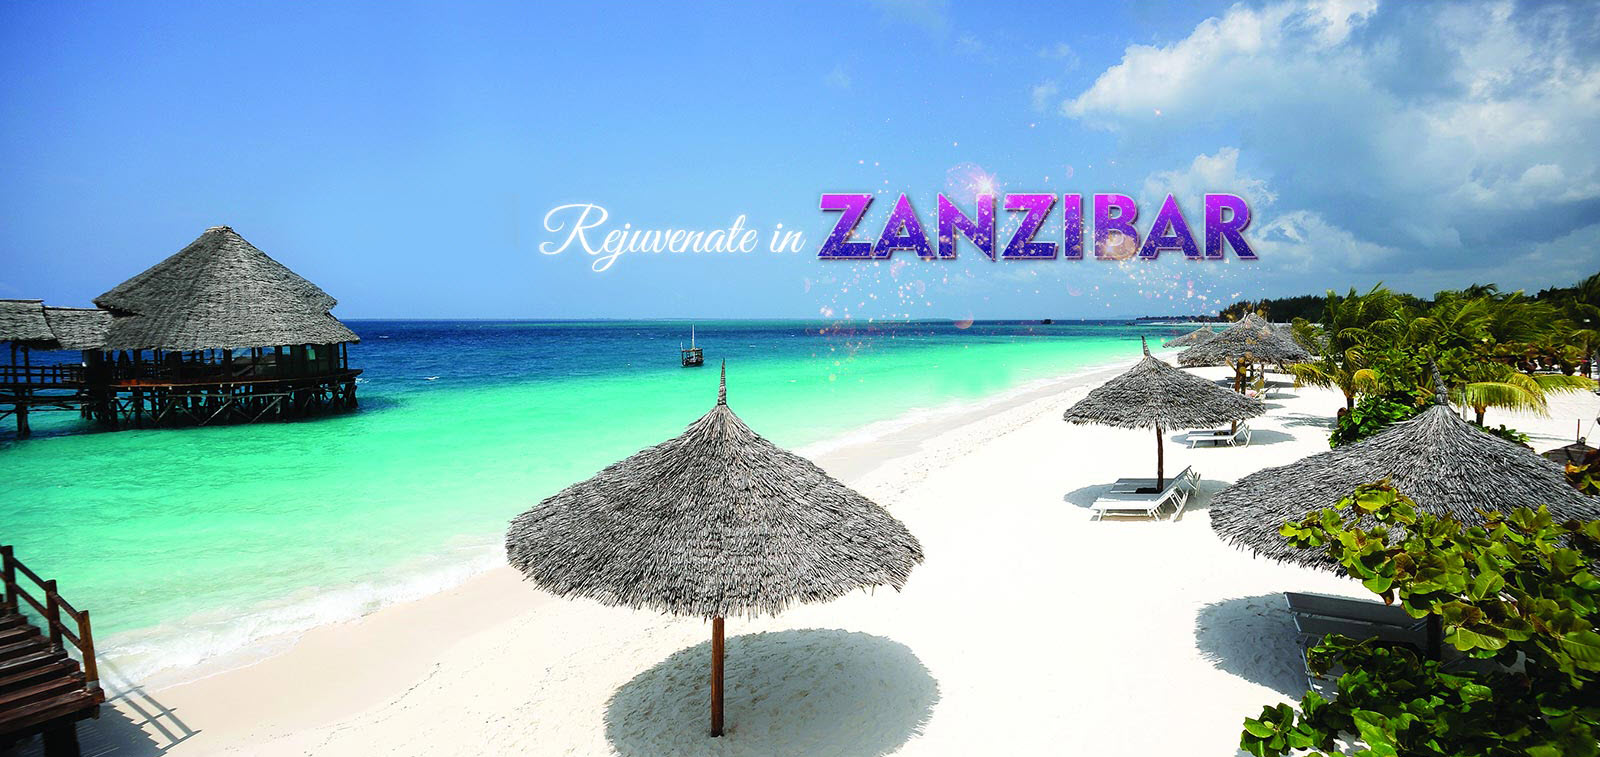 Zanzibar Island Entry Requirements